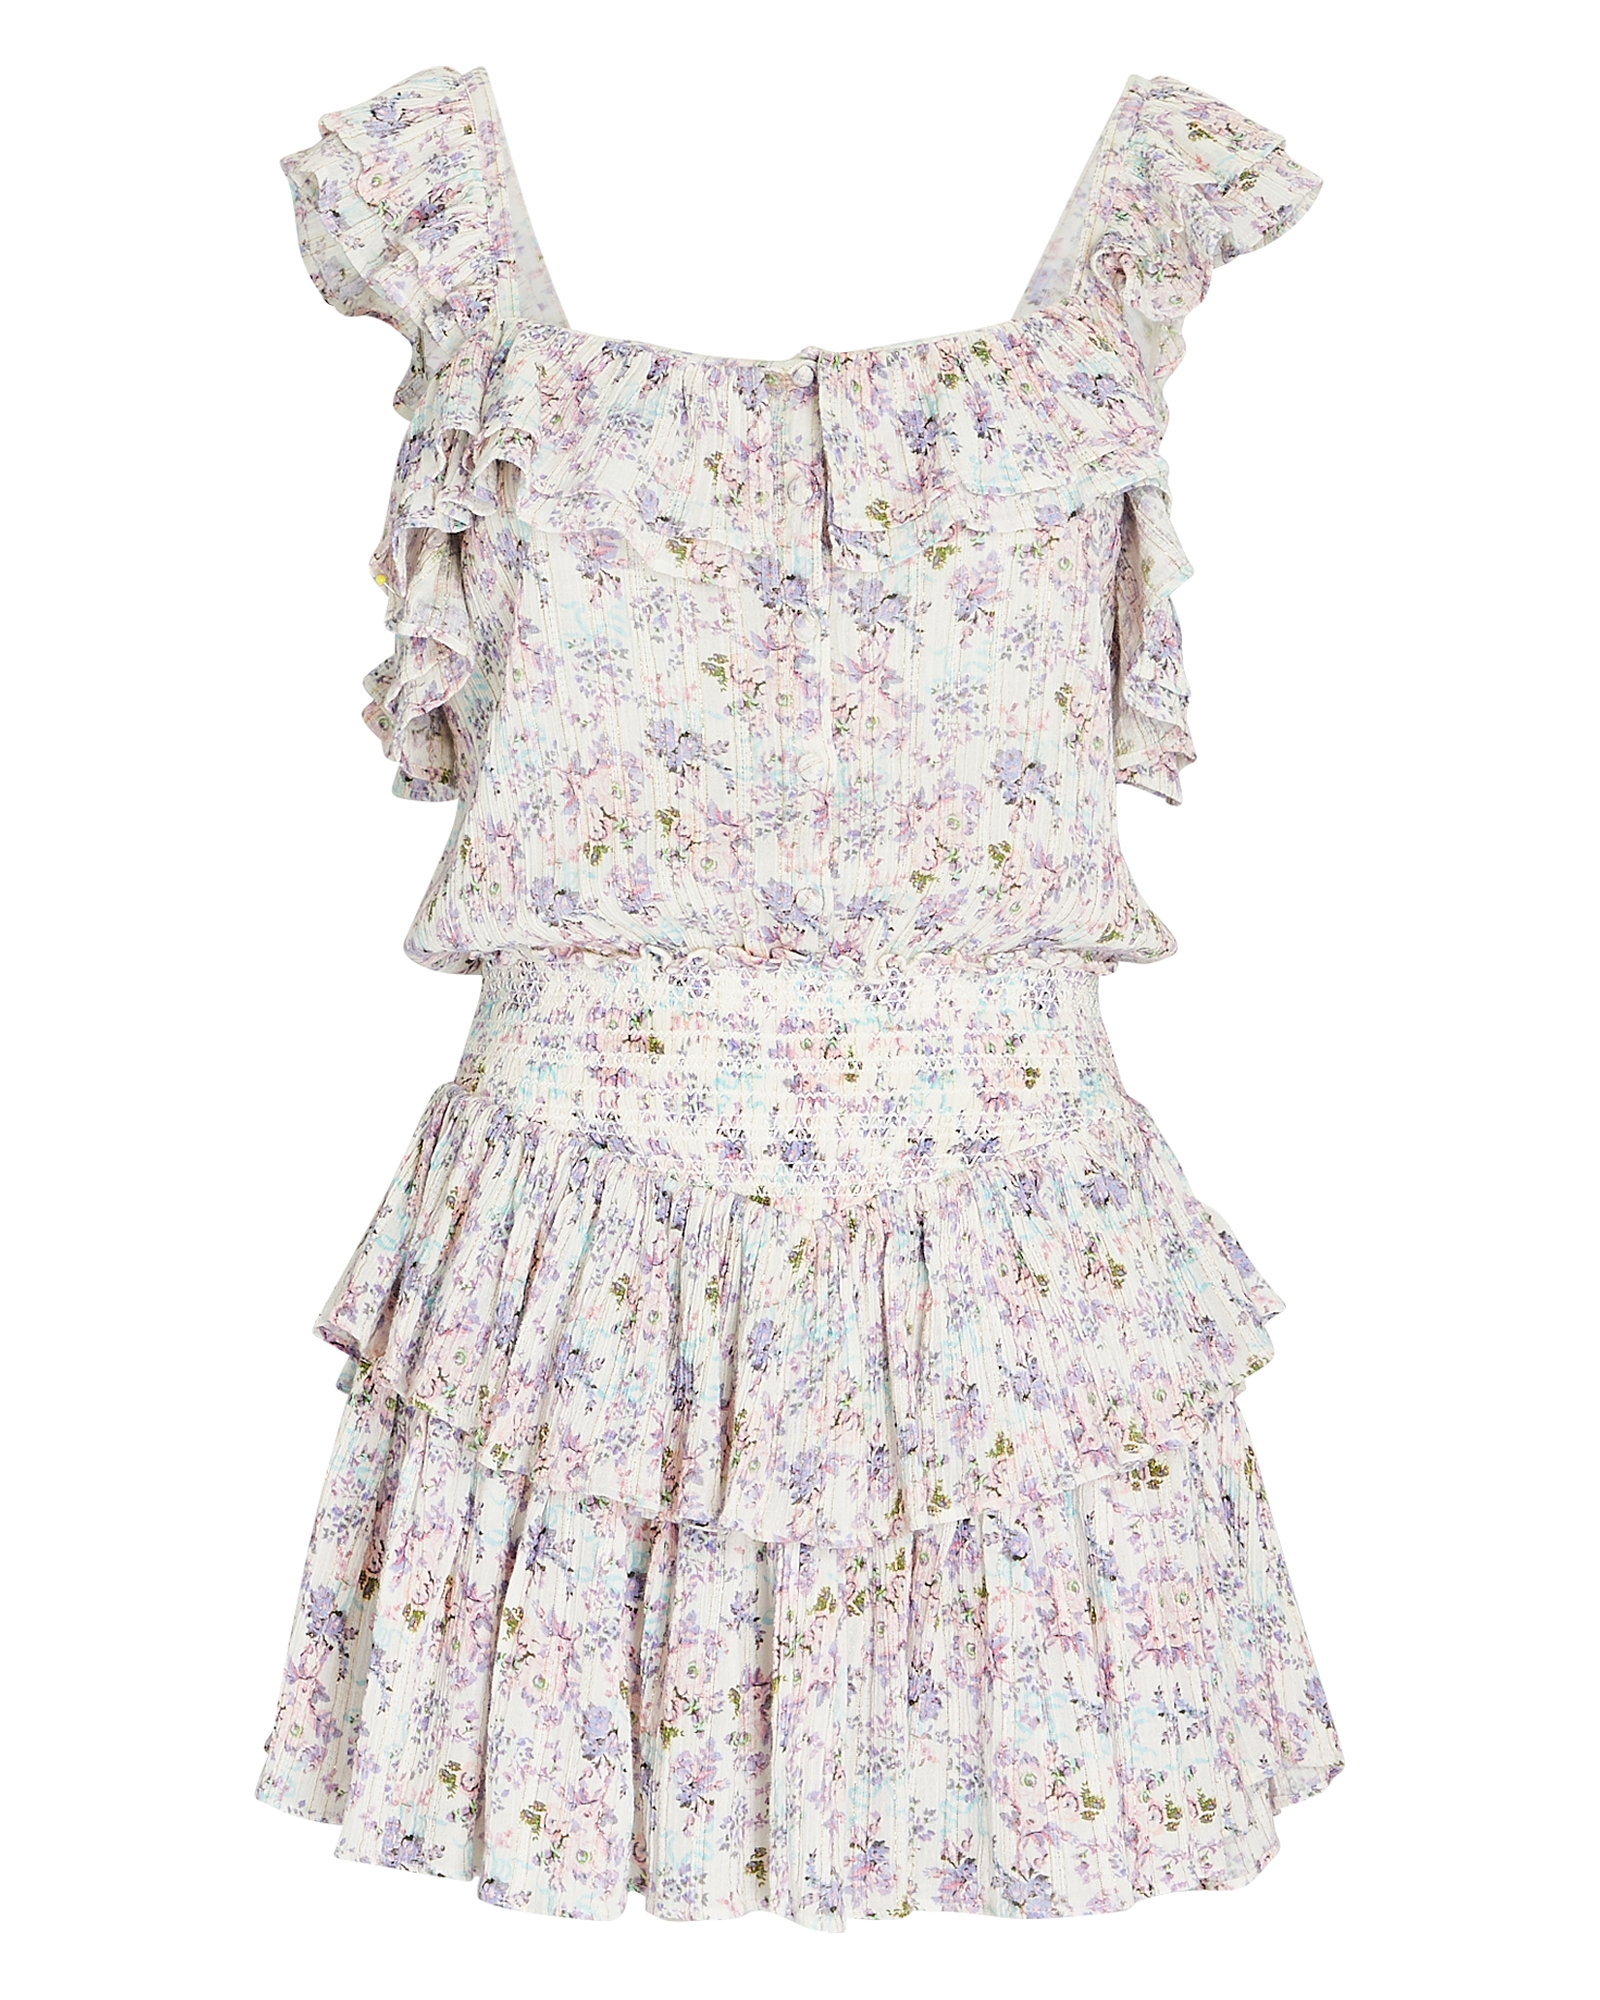 LoveShackFancy Shanley Ruffled Floral Mini Dress | INTERMIX®